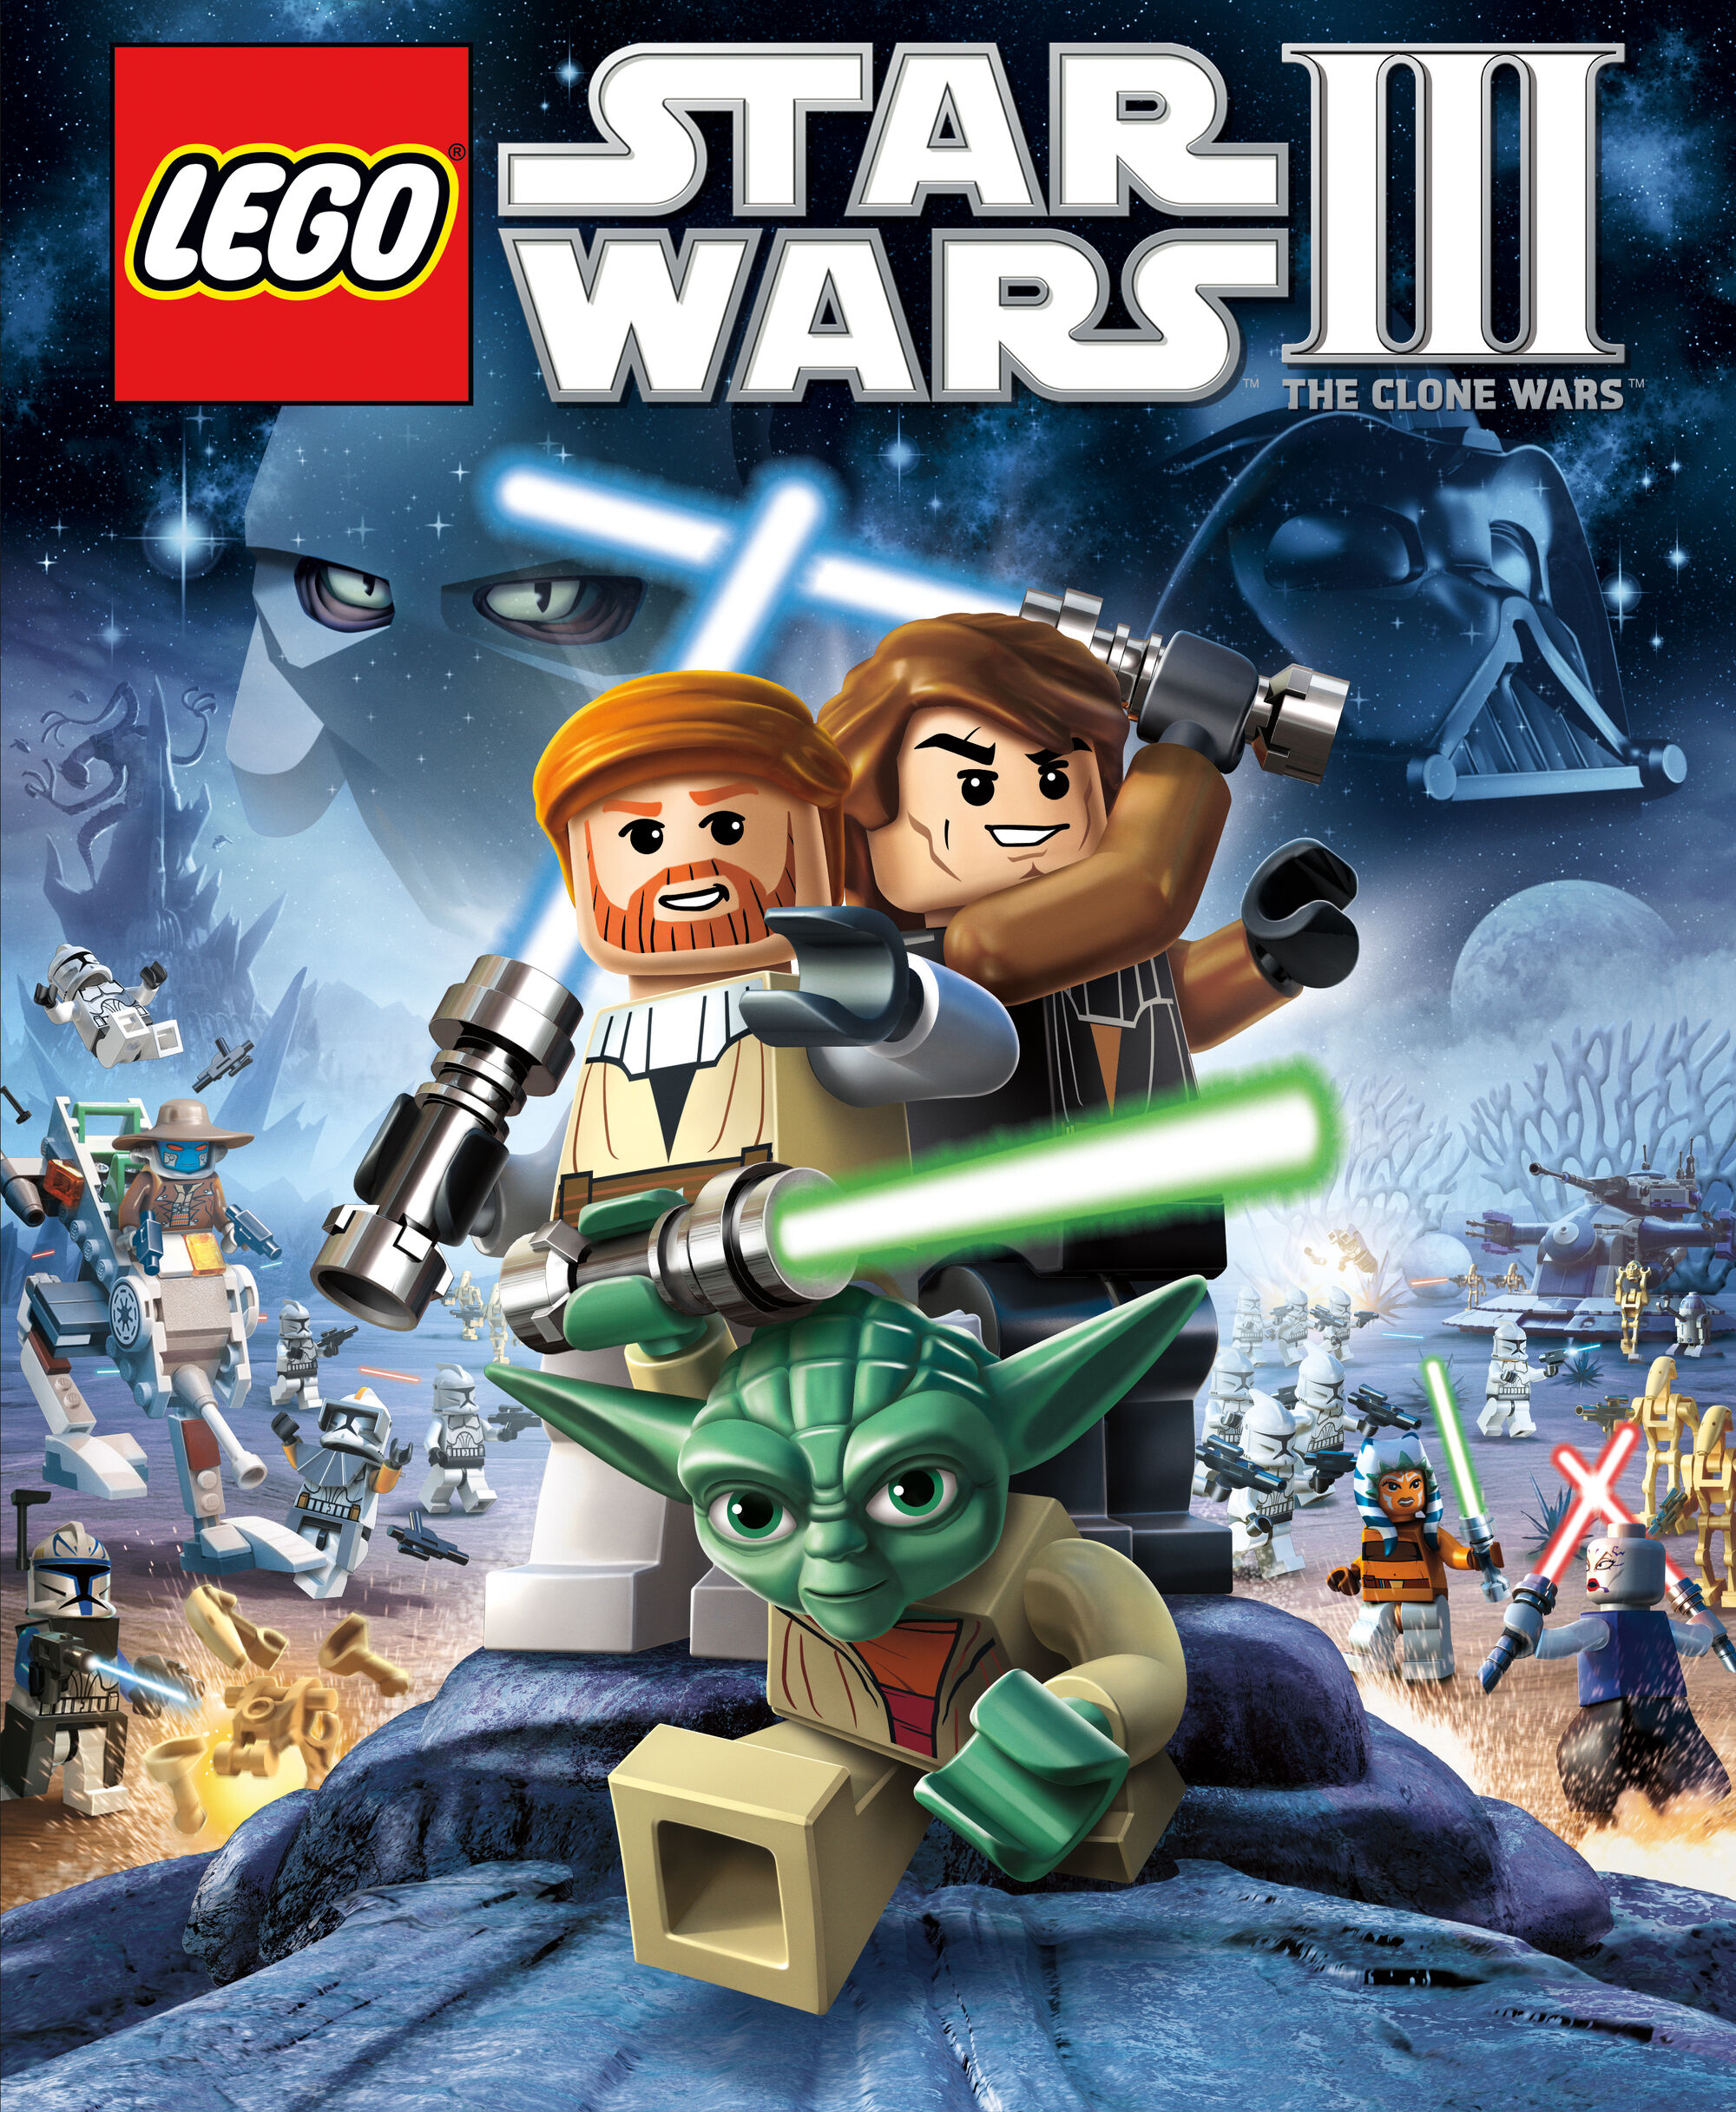 Lego Star Wars 3 The Clone Wars Wii Cheat Codes